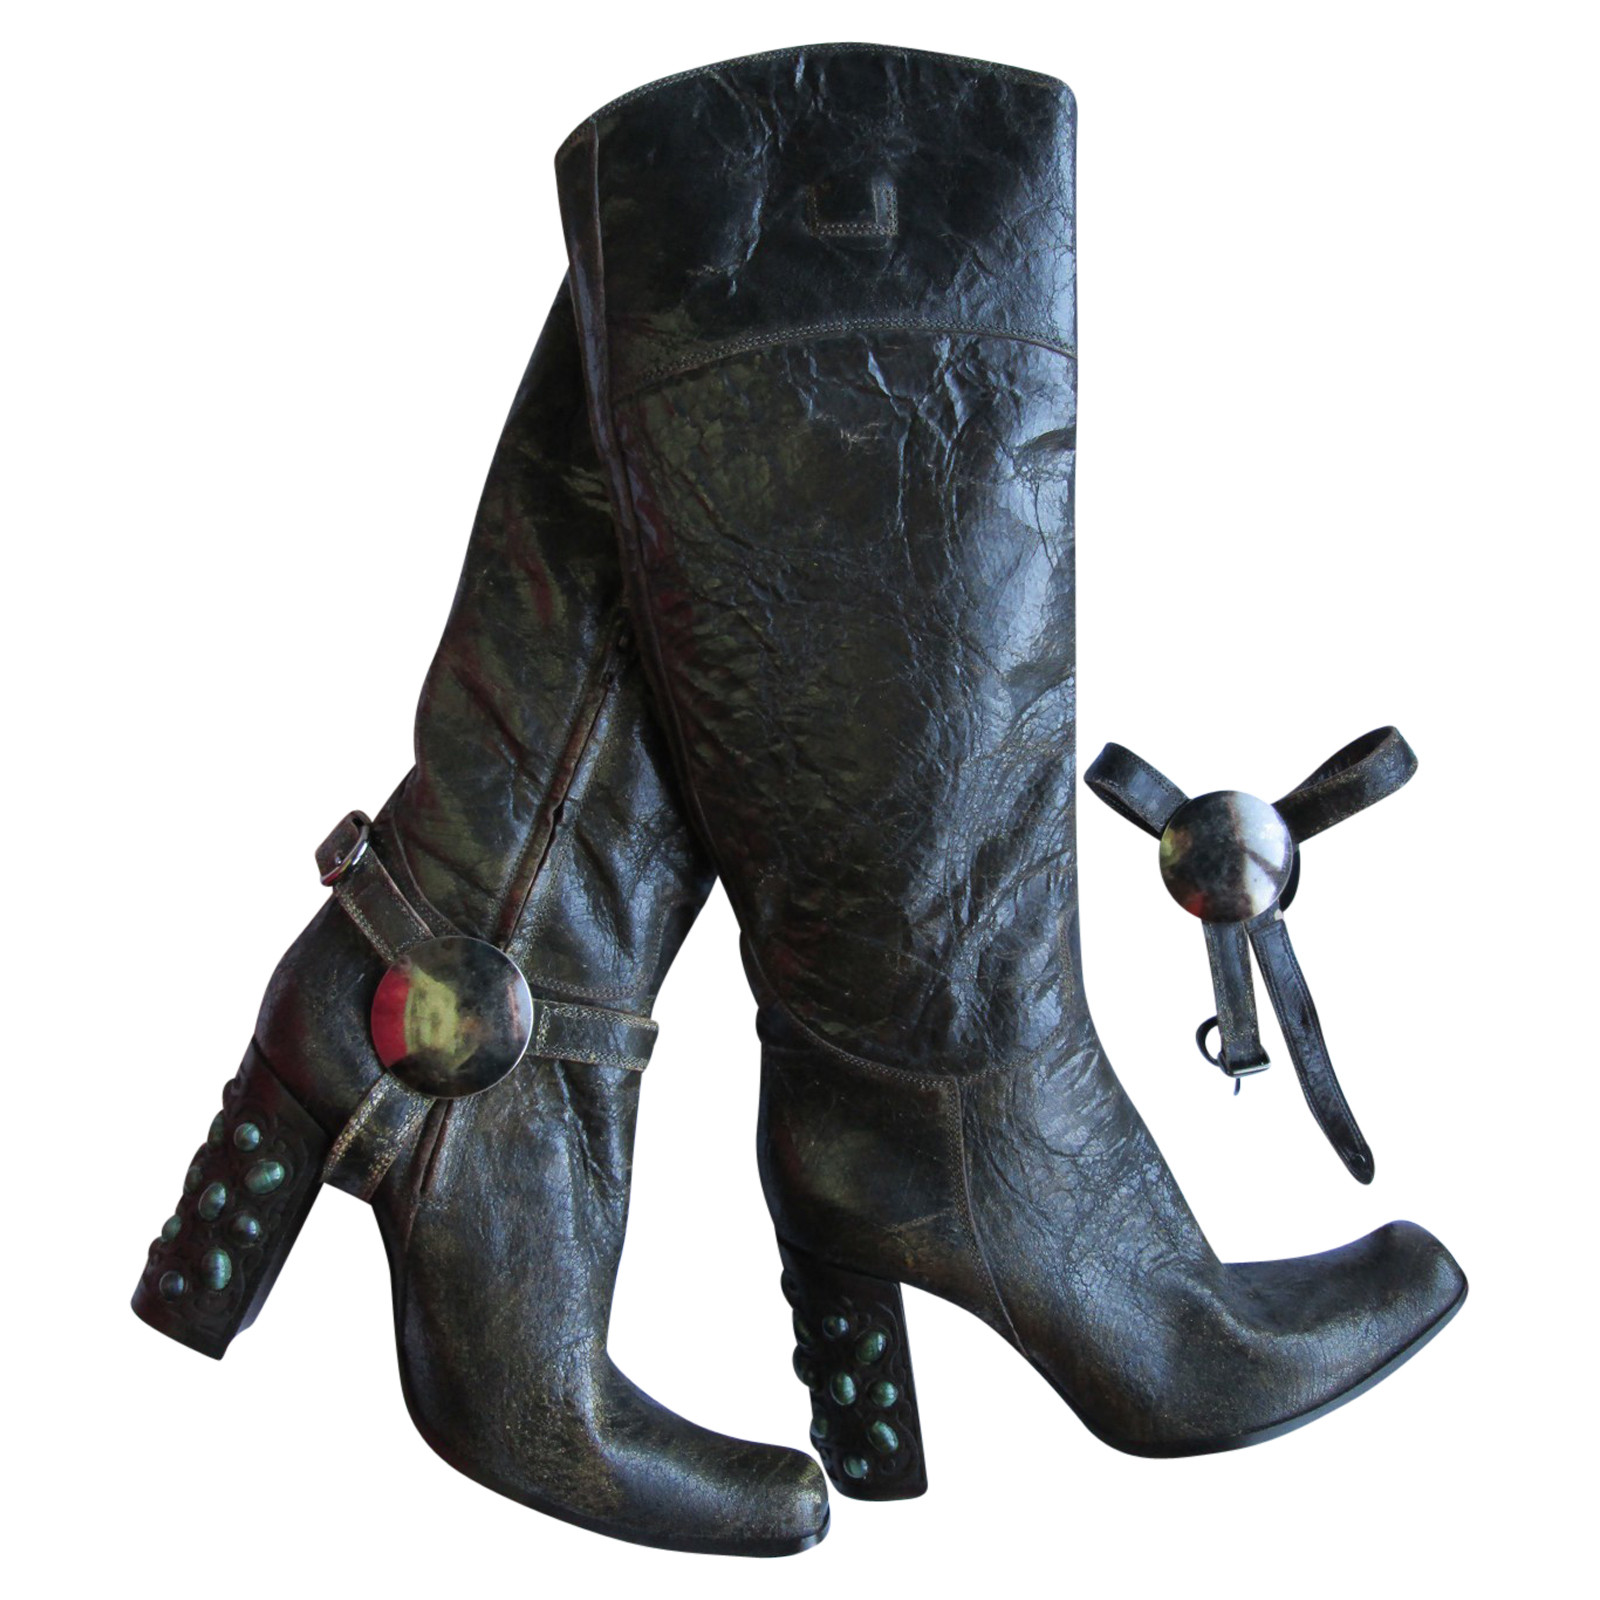 Gianni BarbatoLakleren laarzen- Second-handGianni BarbatoLakleren  laarzengebruikt kopen voor297€(1610597)